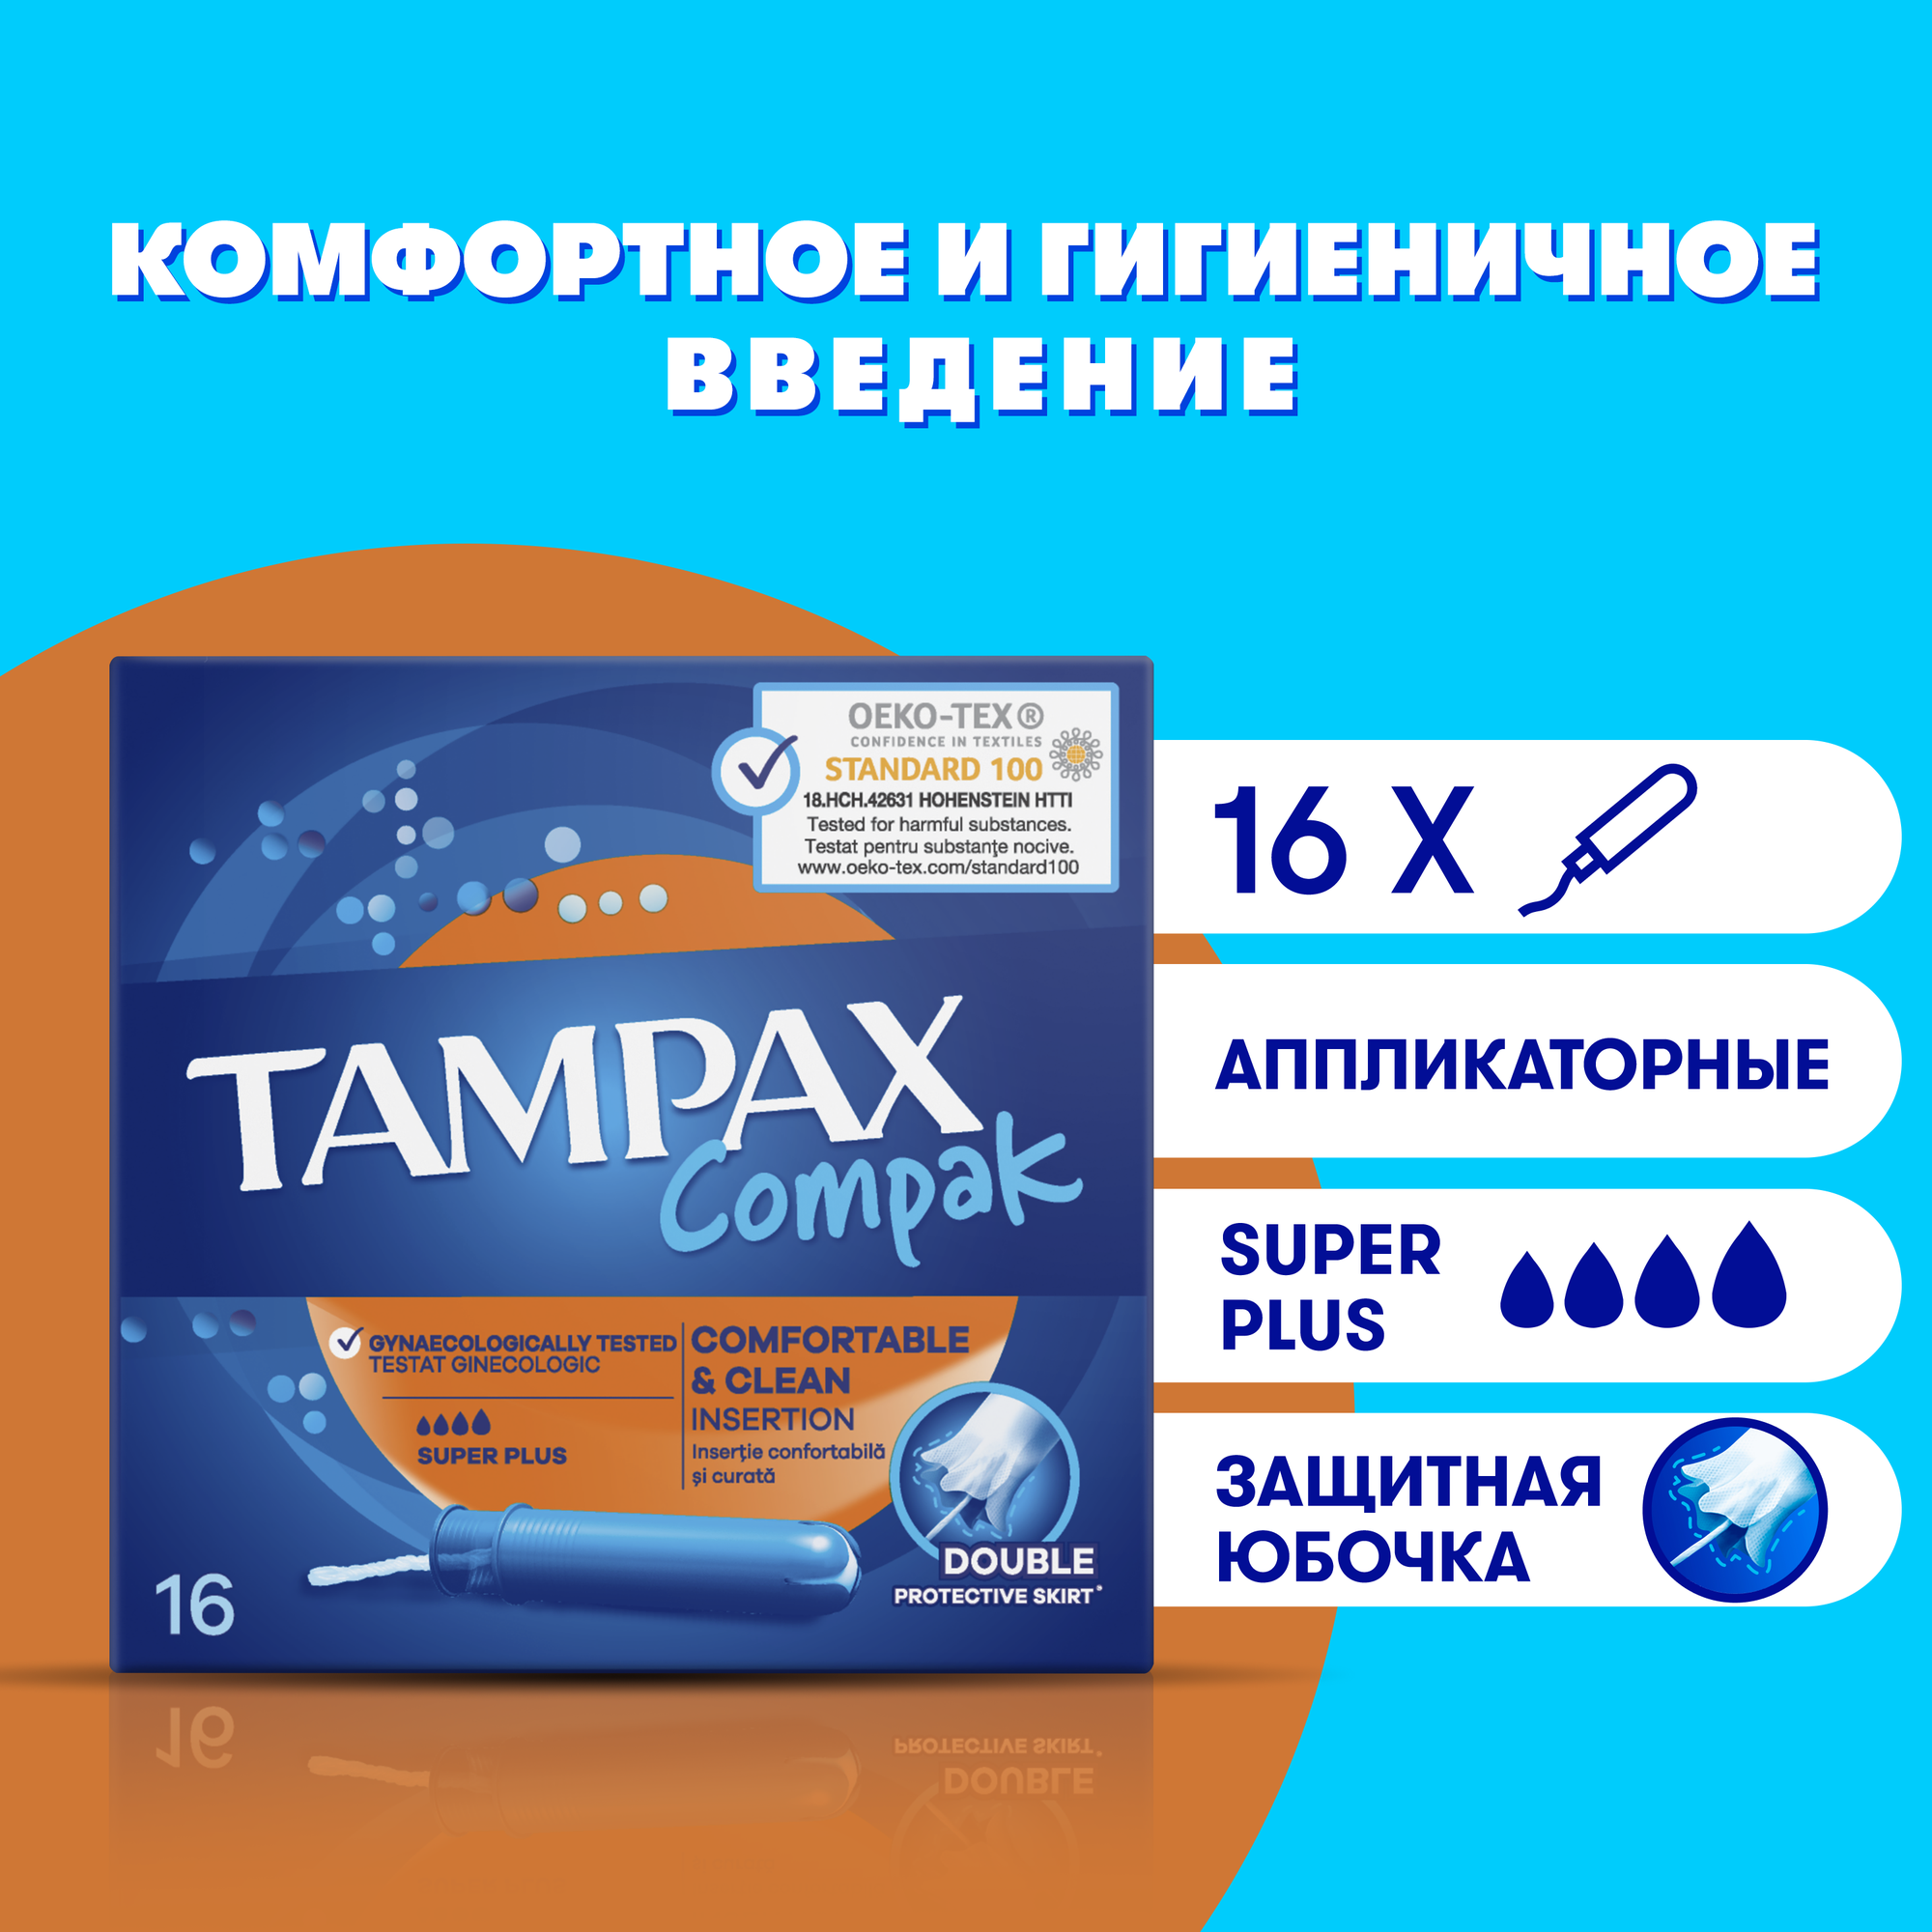 TAMPAX тампоны Compak Super Plus с аппликатором 4 капли